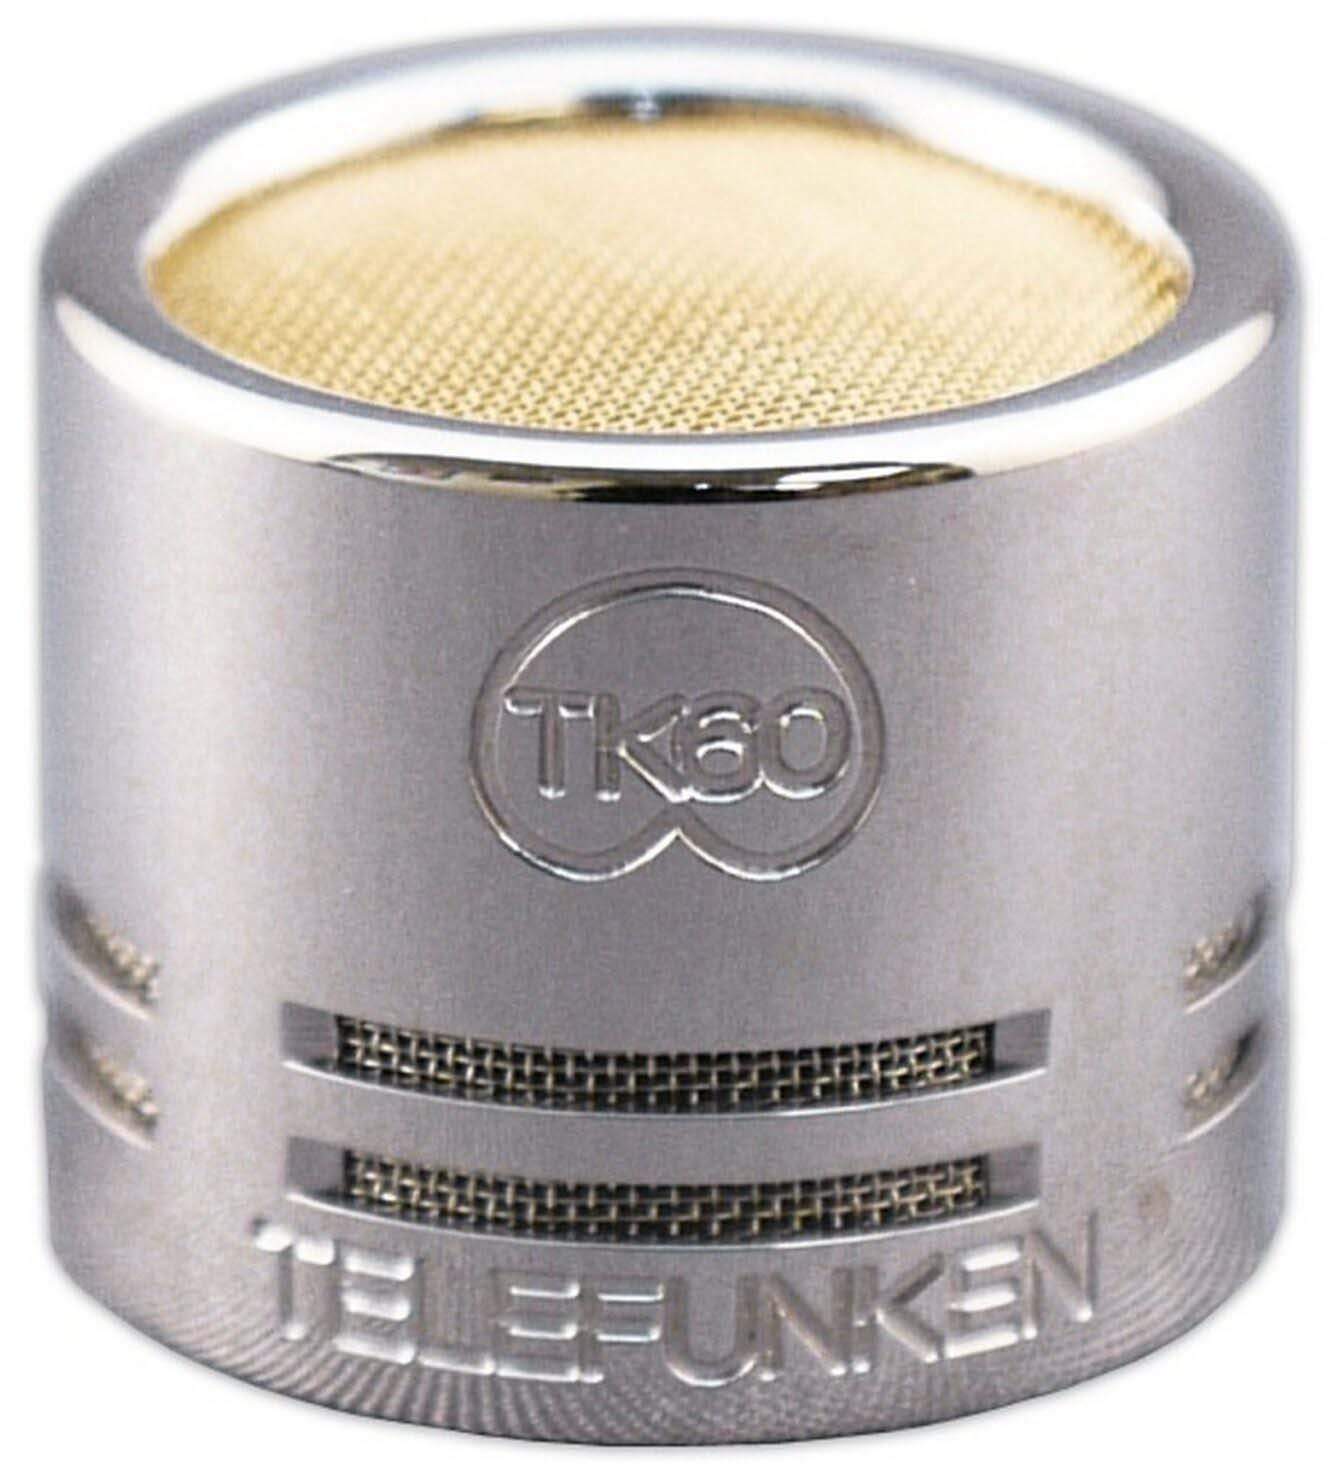 Telefunken M60 Small-Diaphragm FET Condenser Microphone